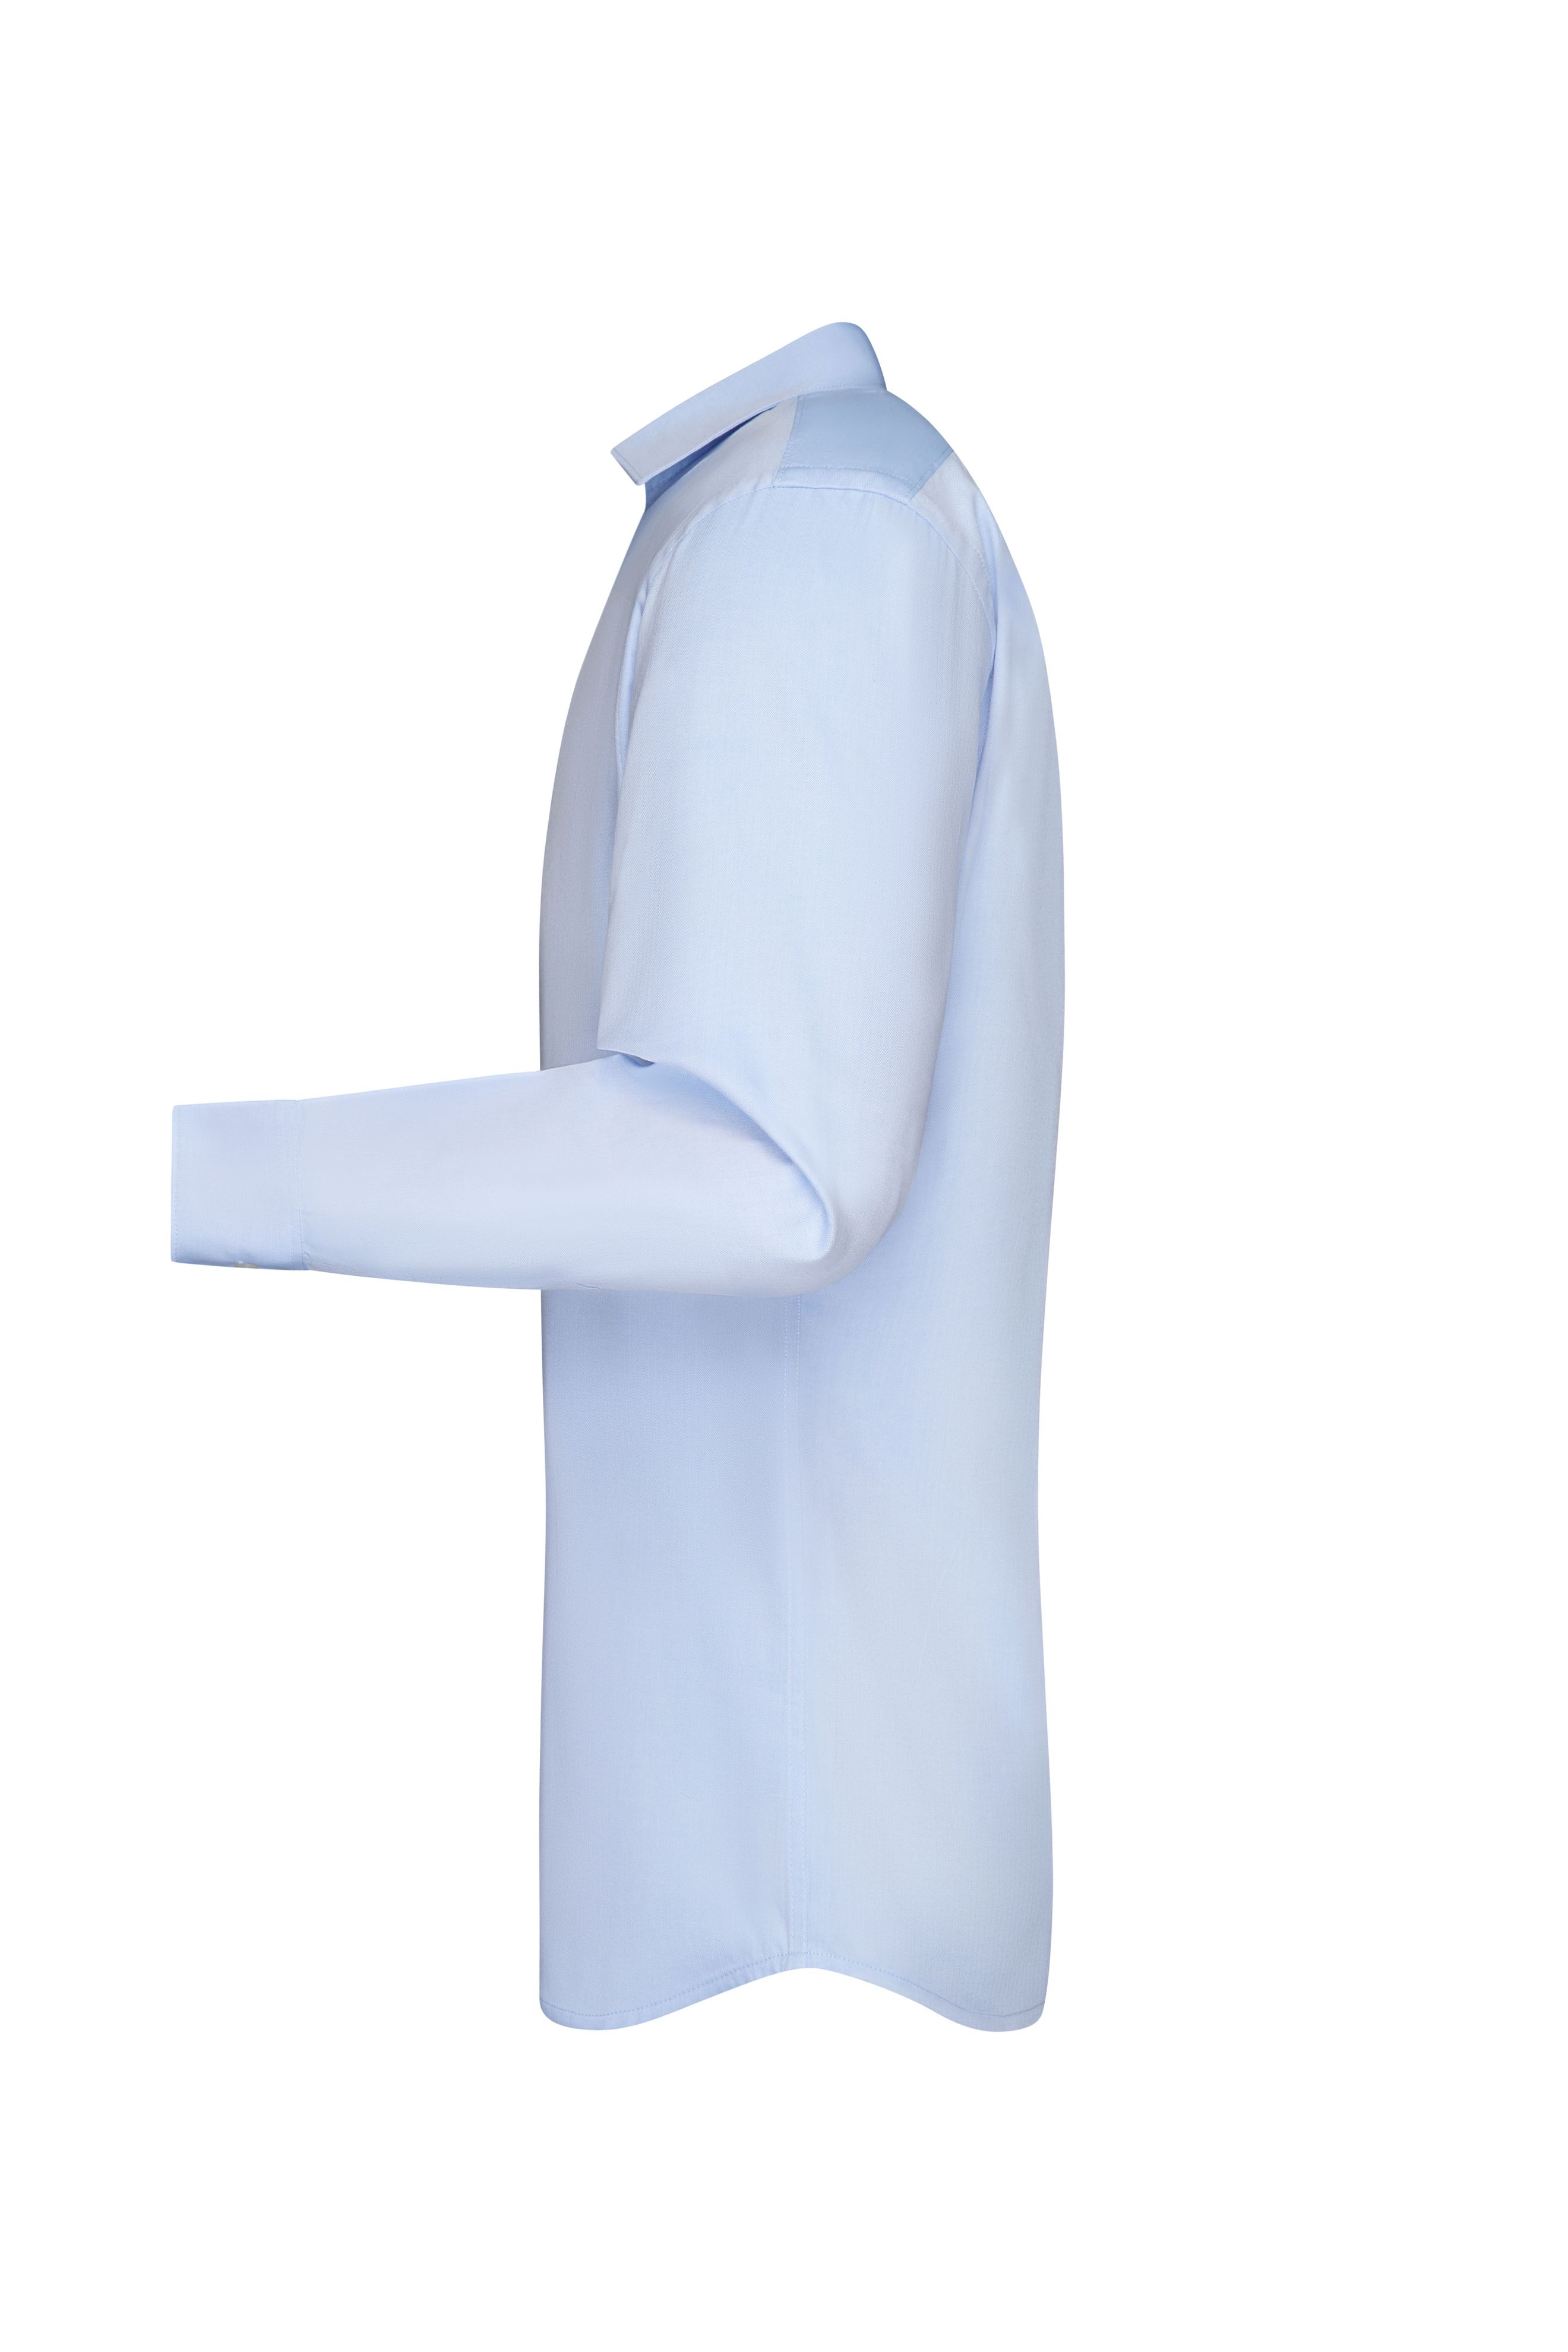 Men's Shirt Longsleeve Herringbone JN690 Klassisches Shirt aus pflegeleichter Mischqualität